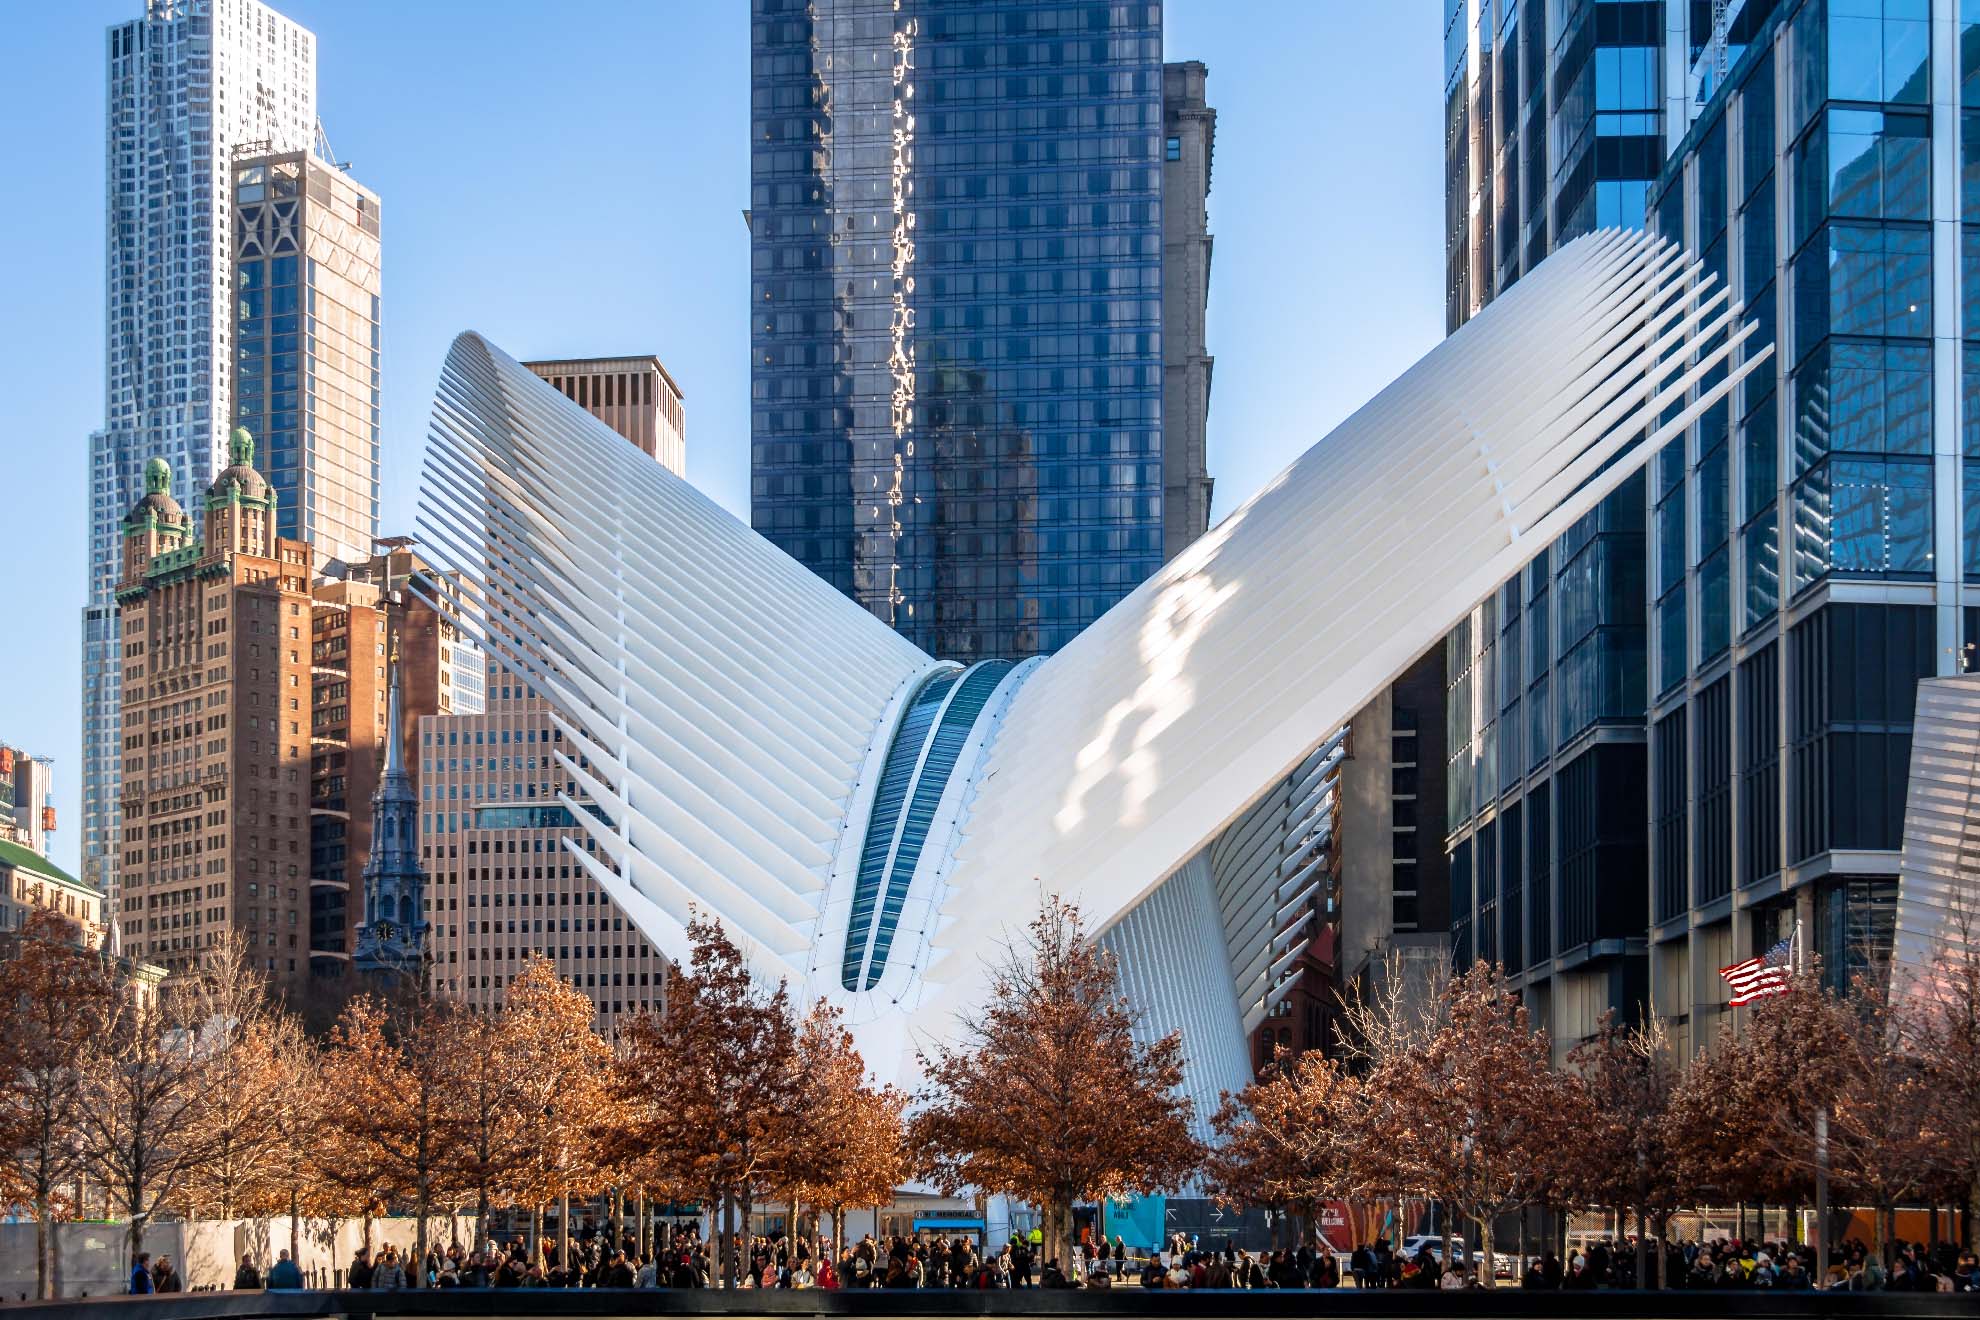 World Trade Center Transportation Hub in NYC by Santiago Calatrava. Image: Alamy stock photo